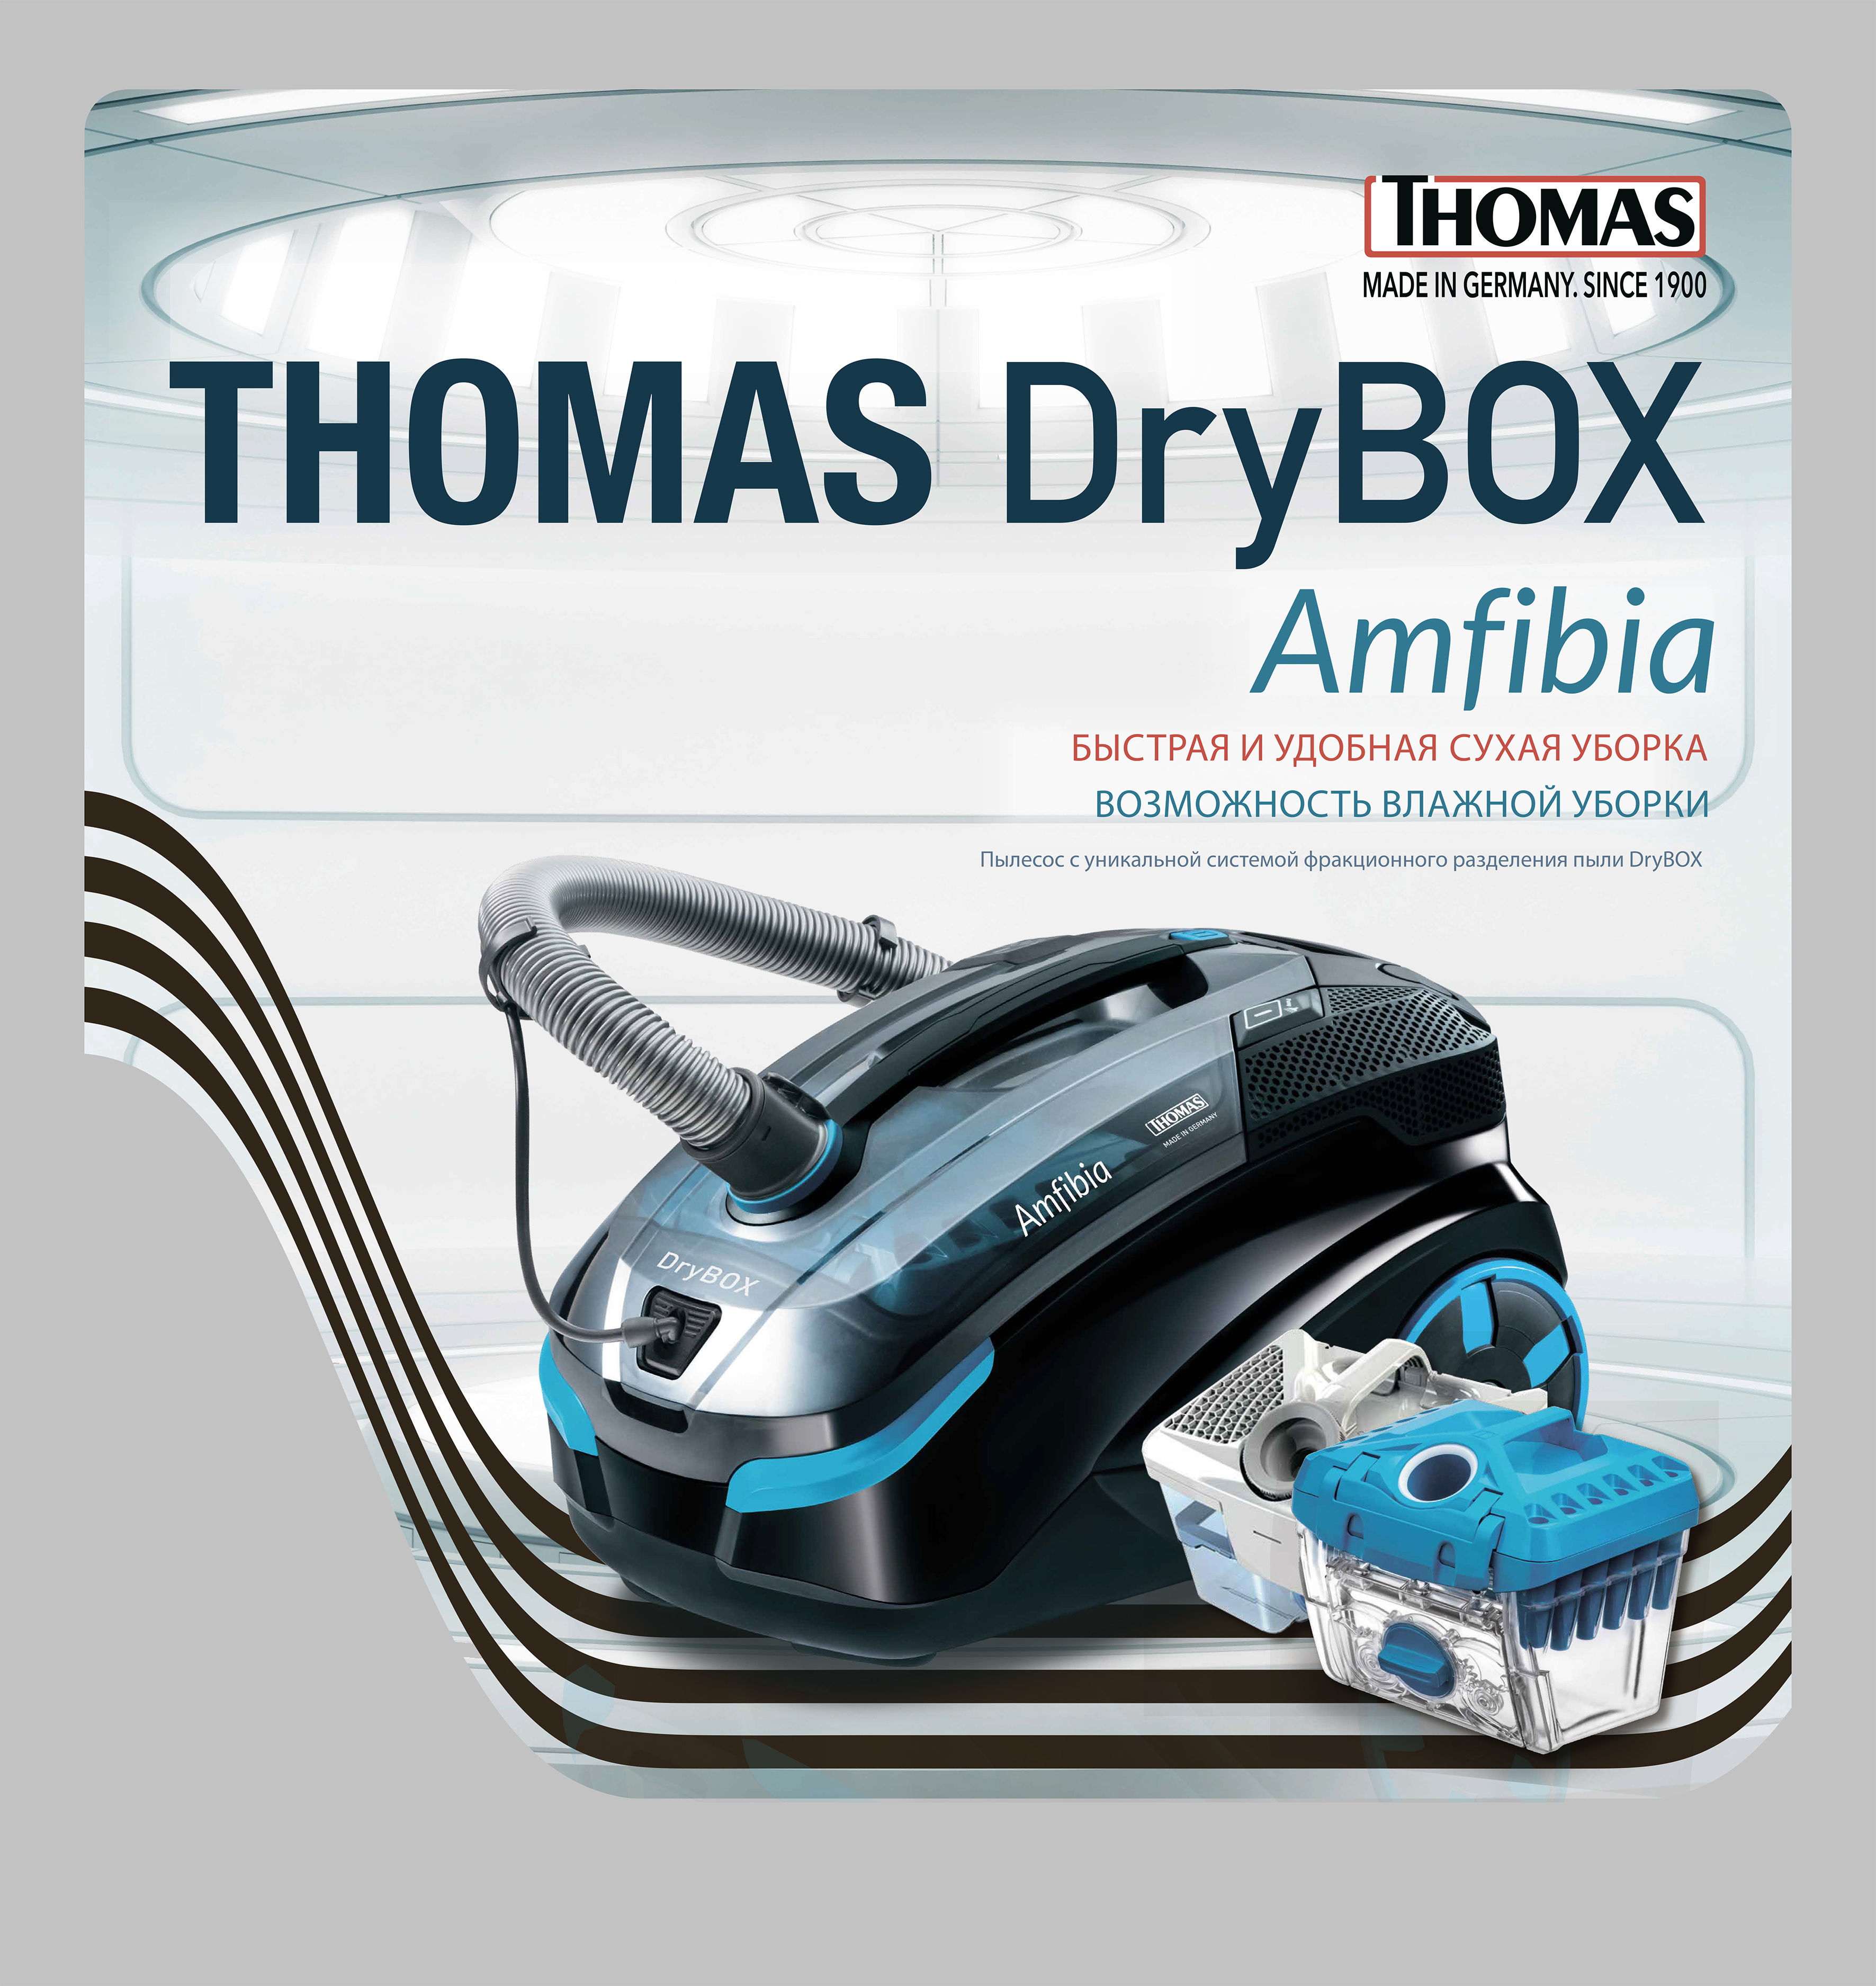 Thomas drybox amfibia купить. Thomas DRYBOX Amfibia. Thomas since 1900 моющий пылесос.